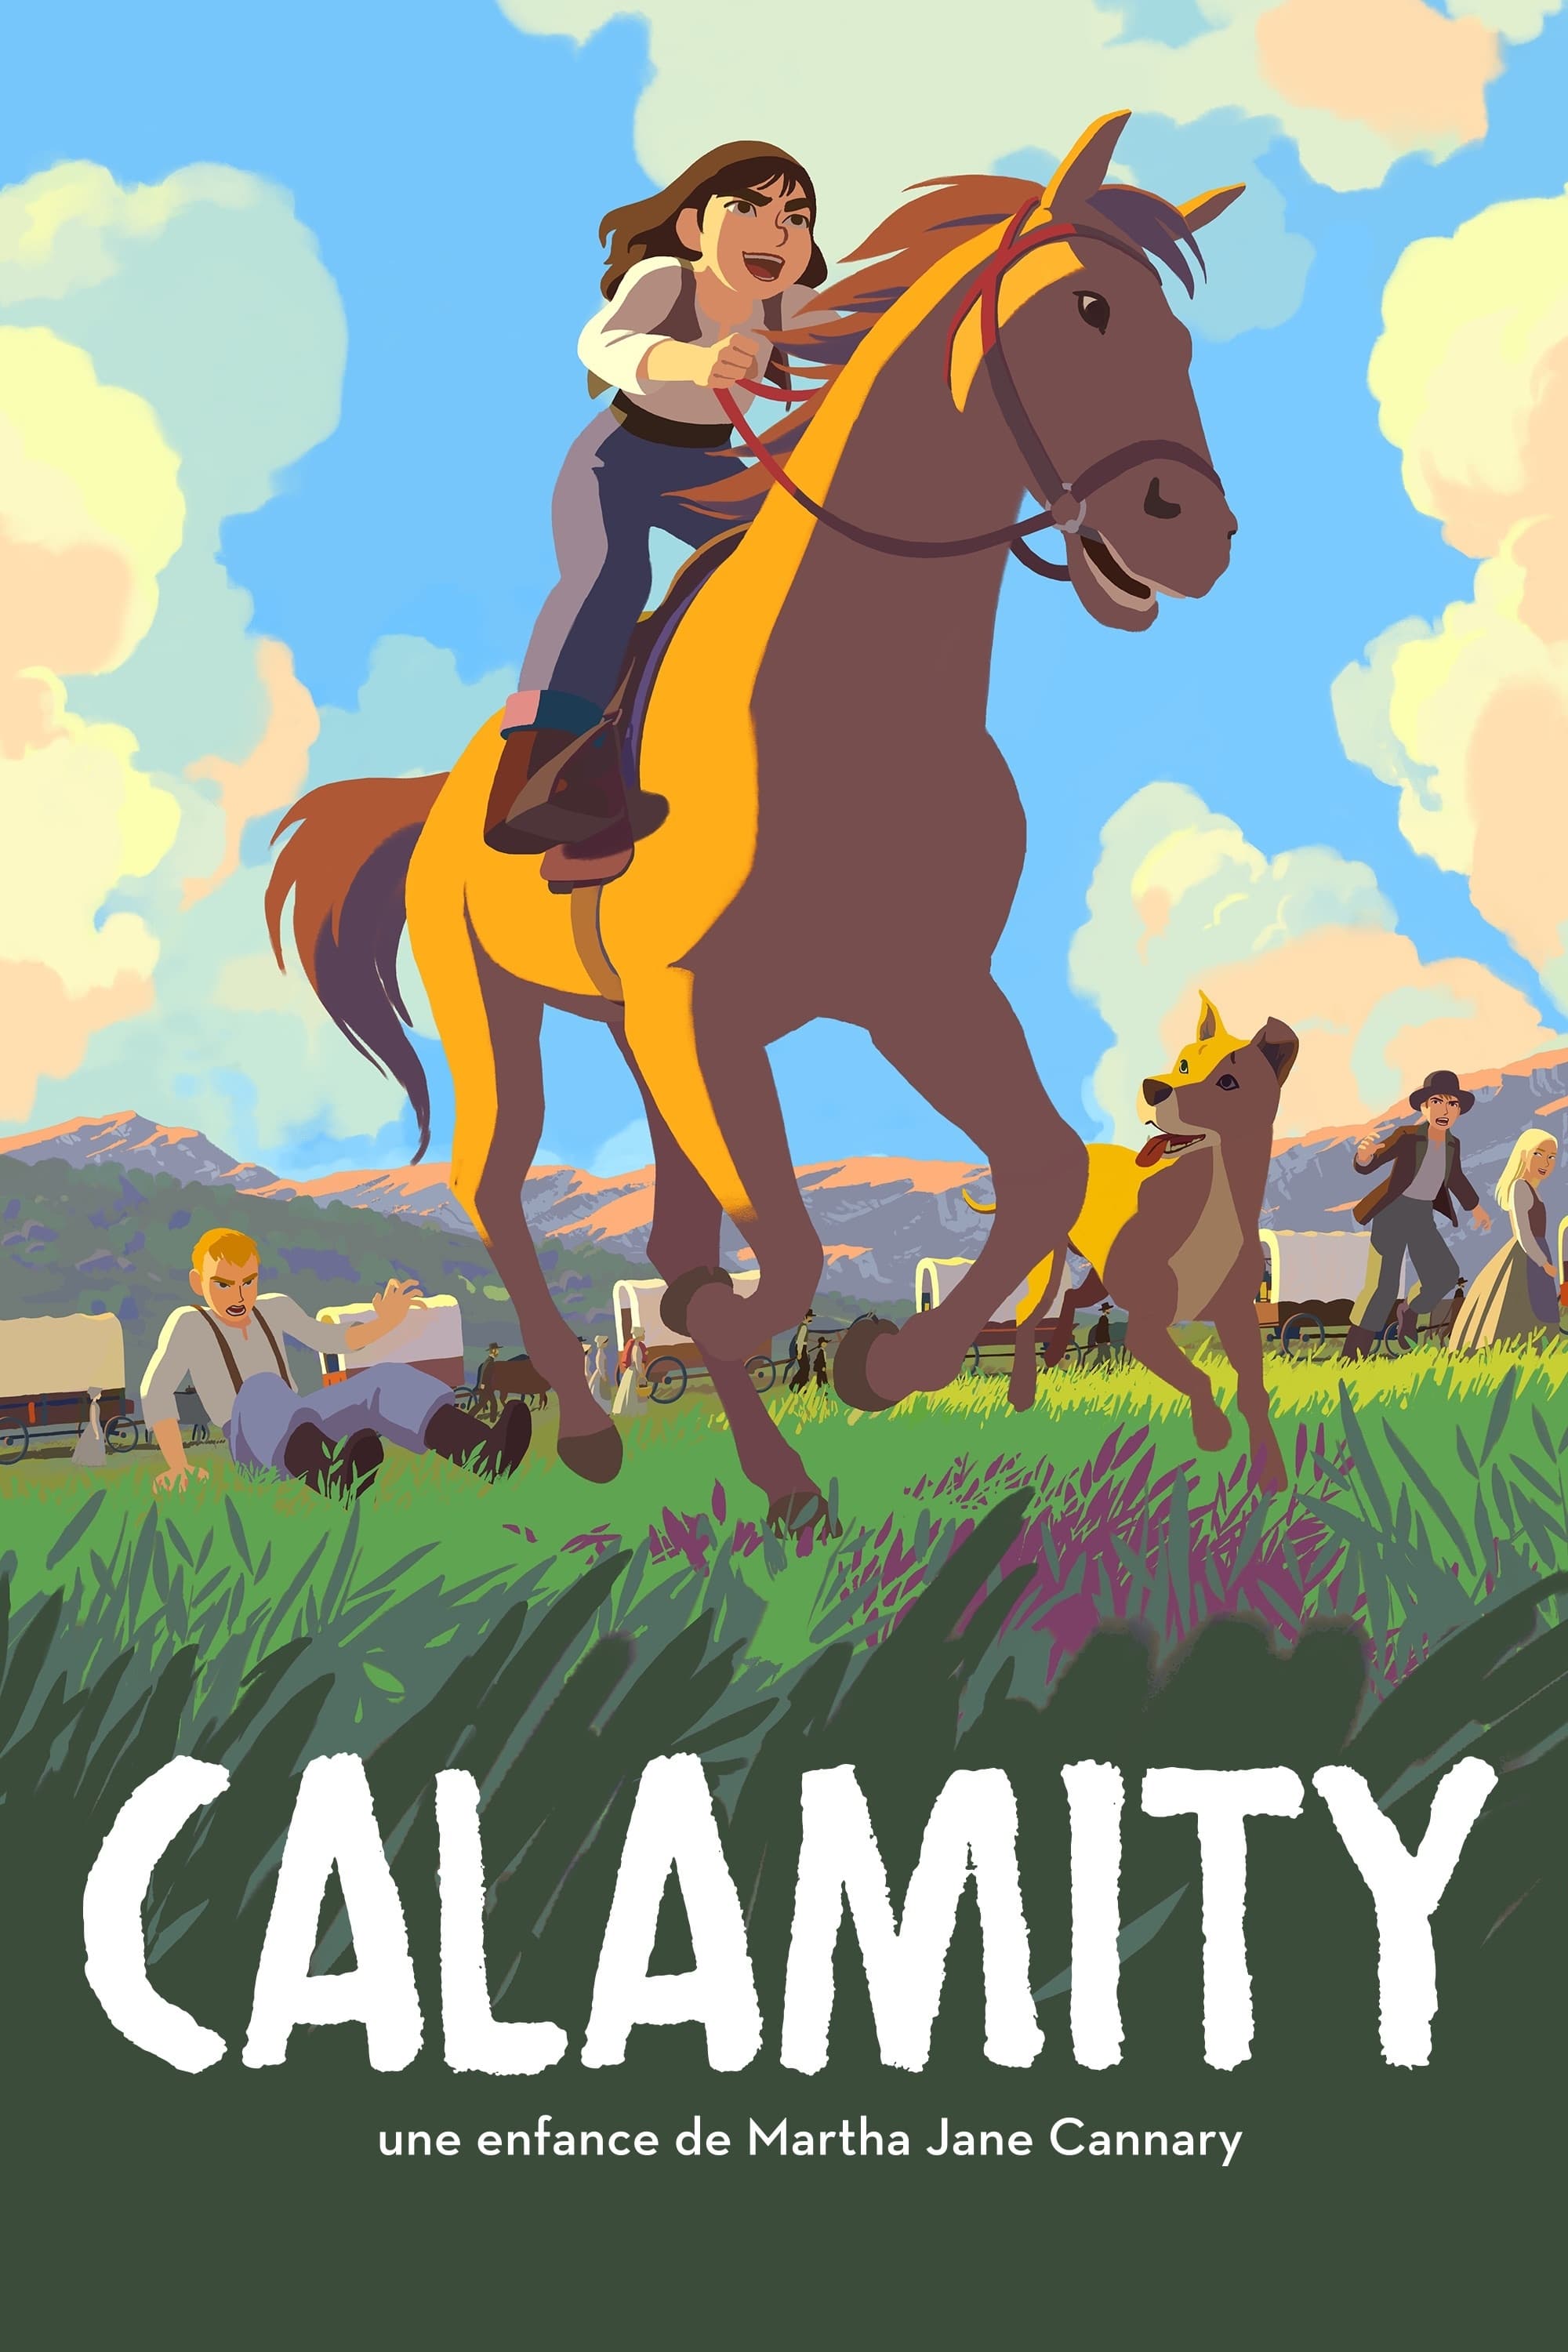 Caratula de Calamity, une enfance de Martha Jane Cannary (Calamity) 